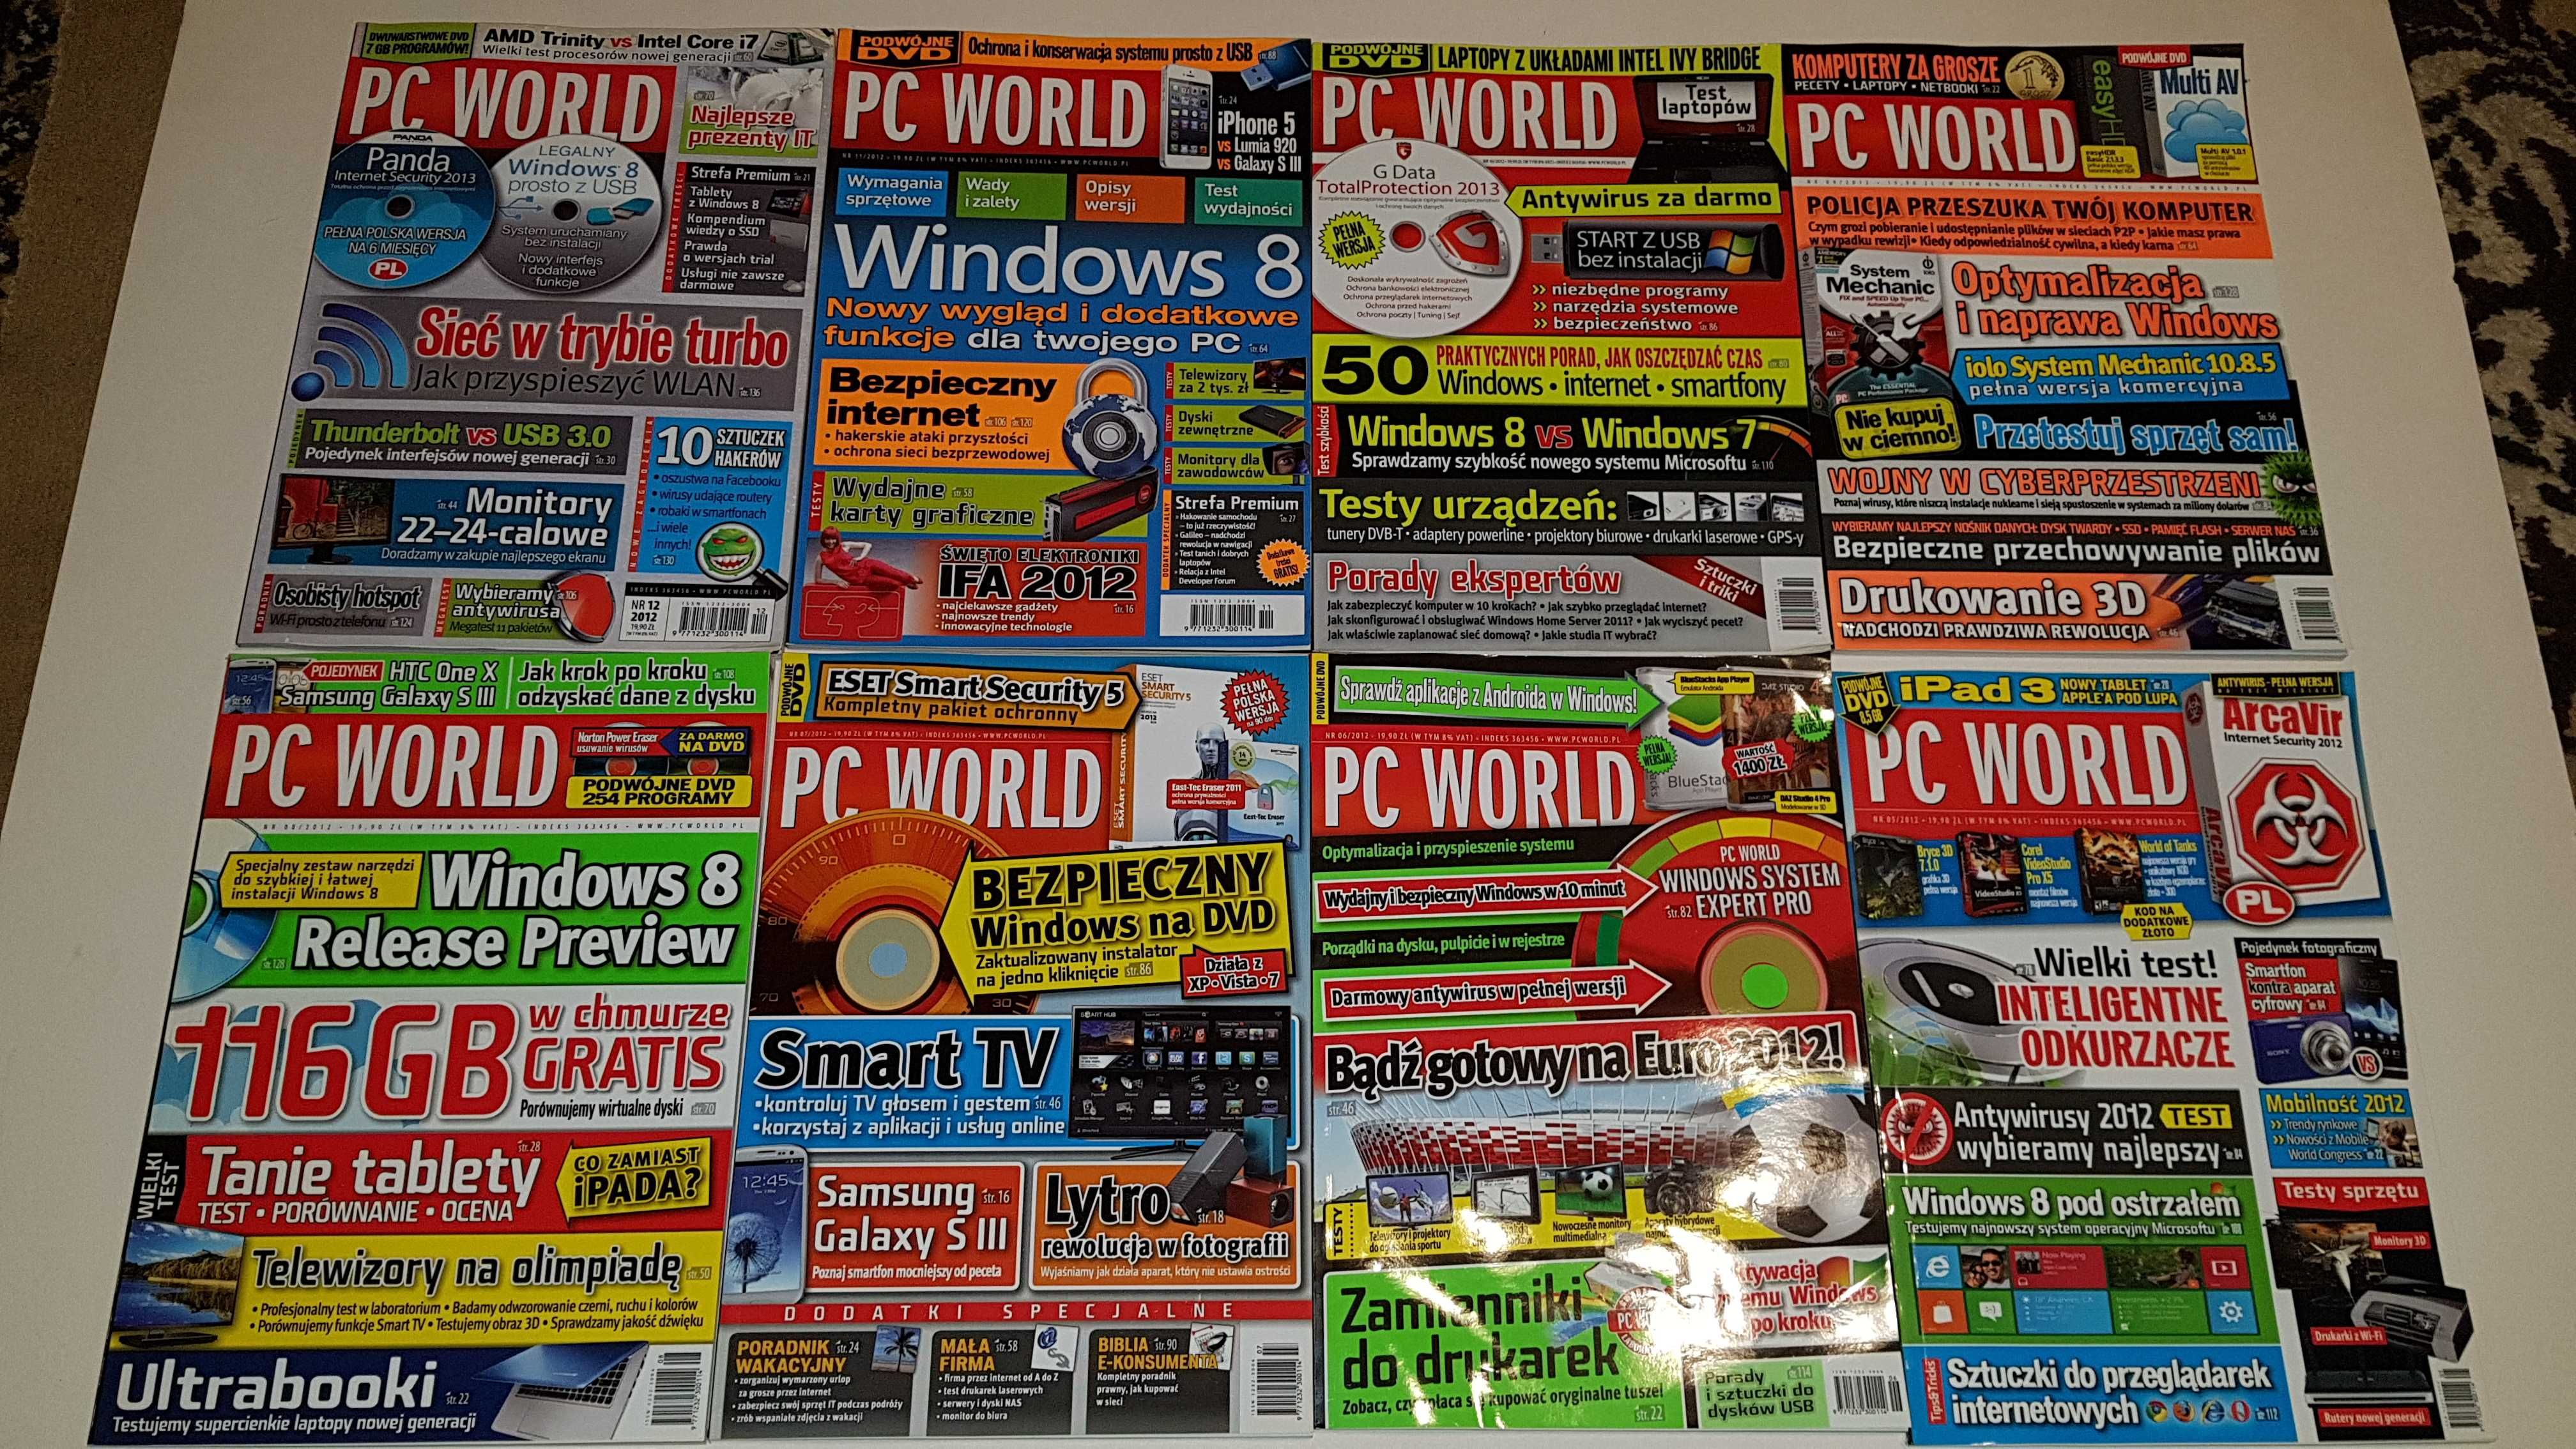 PC WORLD gazety komputerowe - 41 gazet